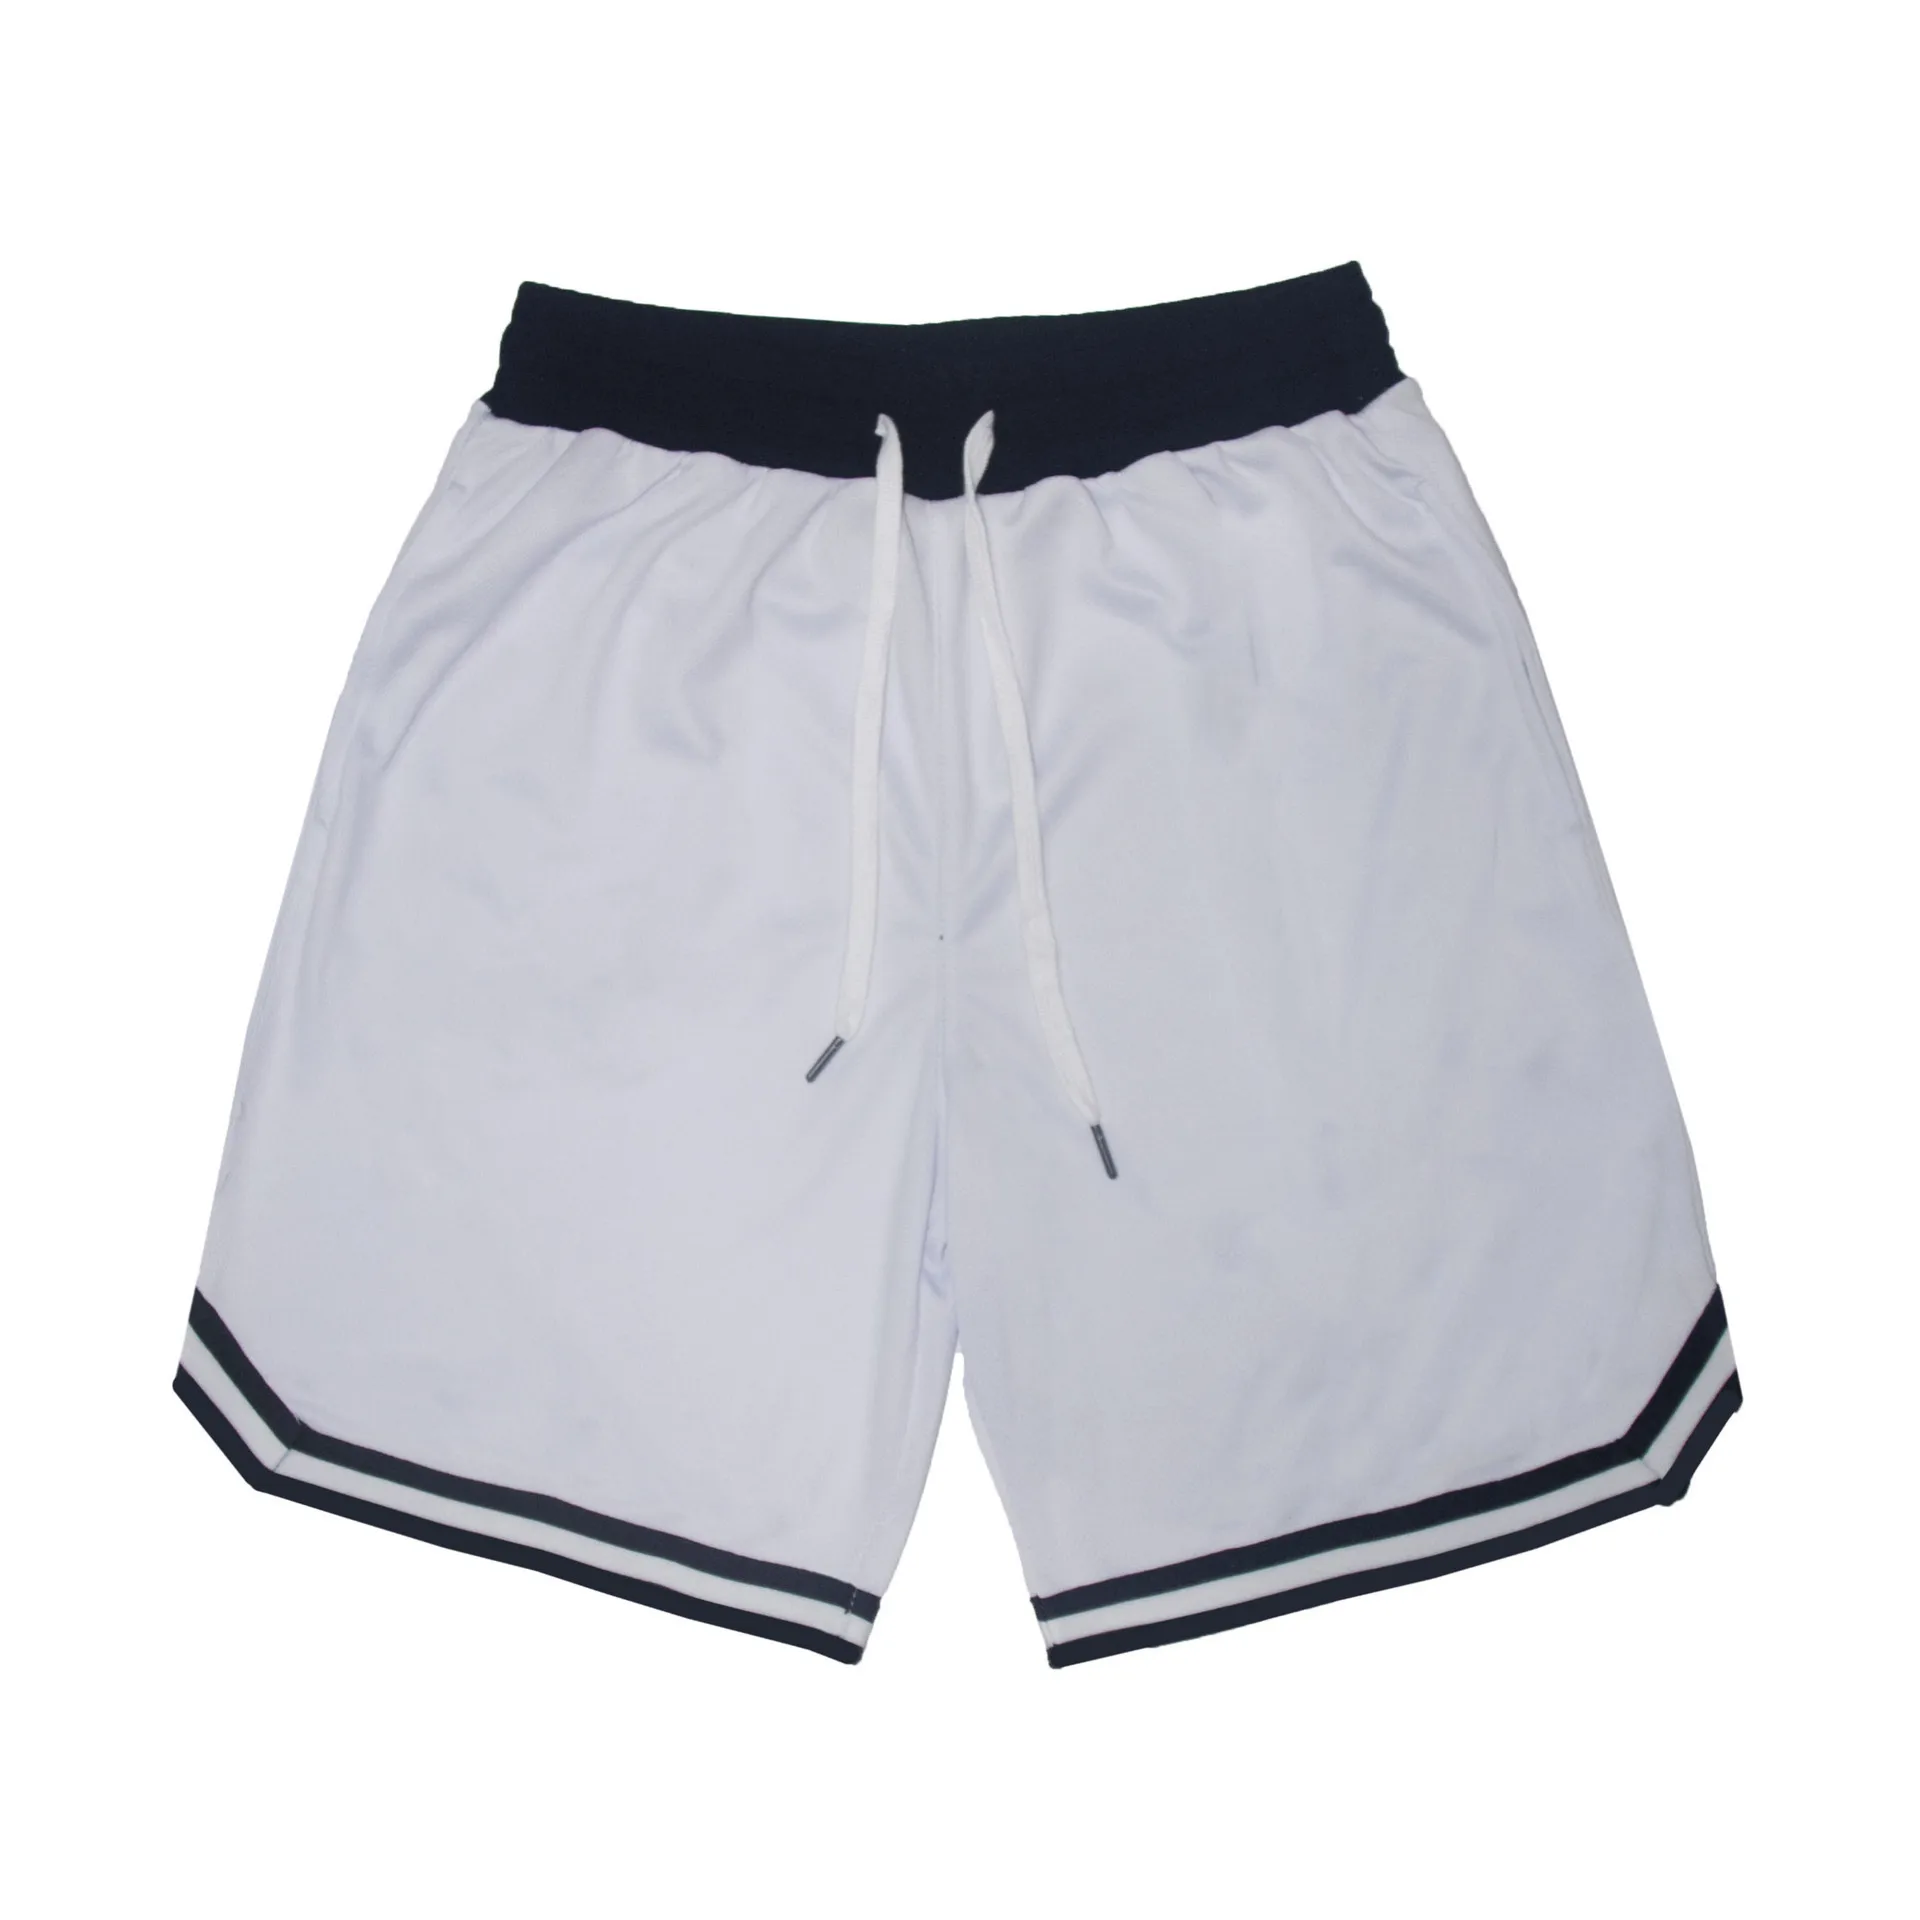 mens casual summer shorts Men's fitness shorts Mesh breathable moisture absorption sweat basketball pants running sports leisure pants maamgic sweat shorts